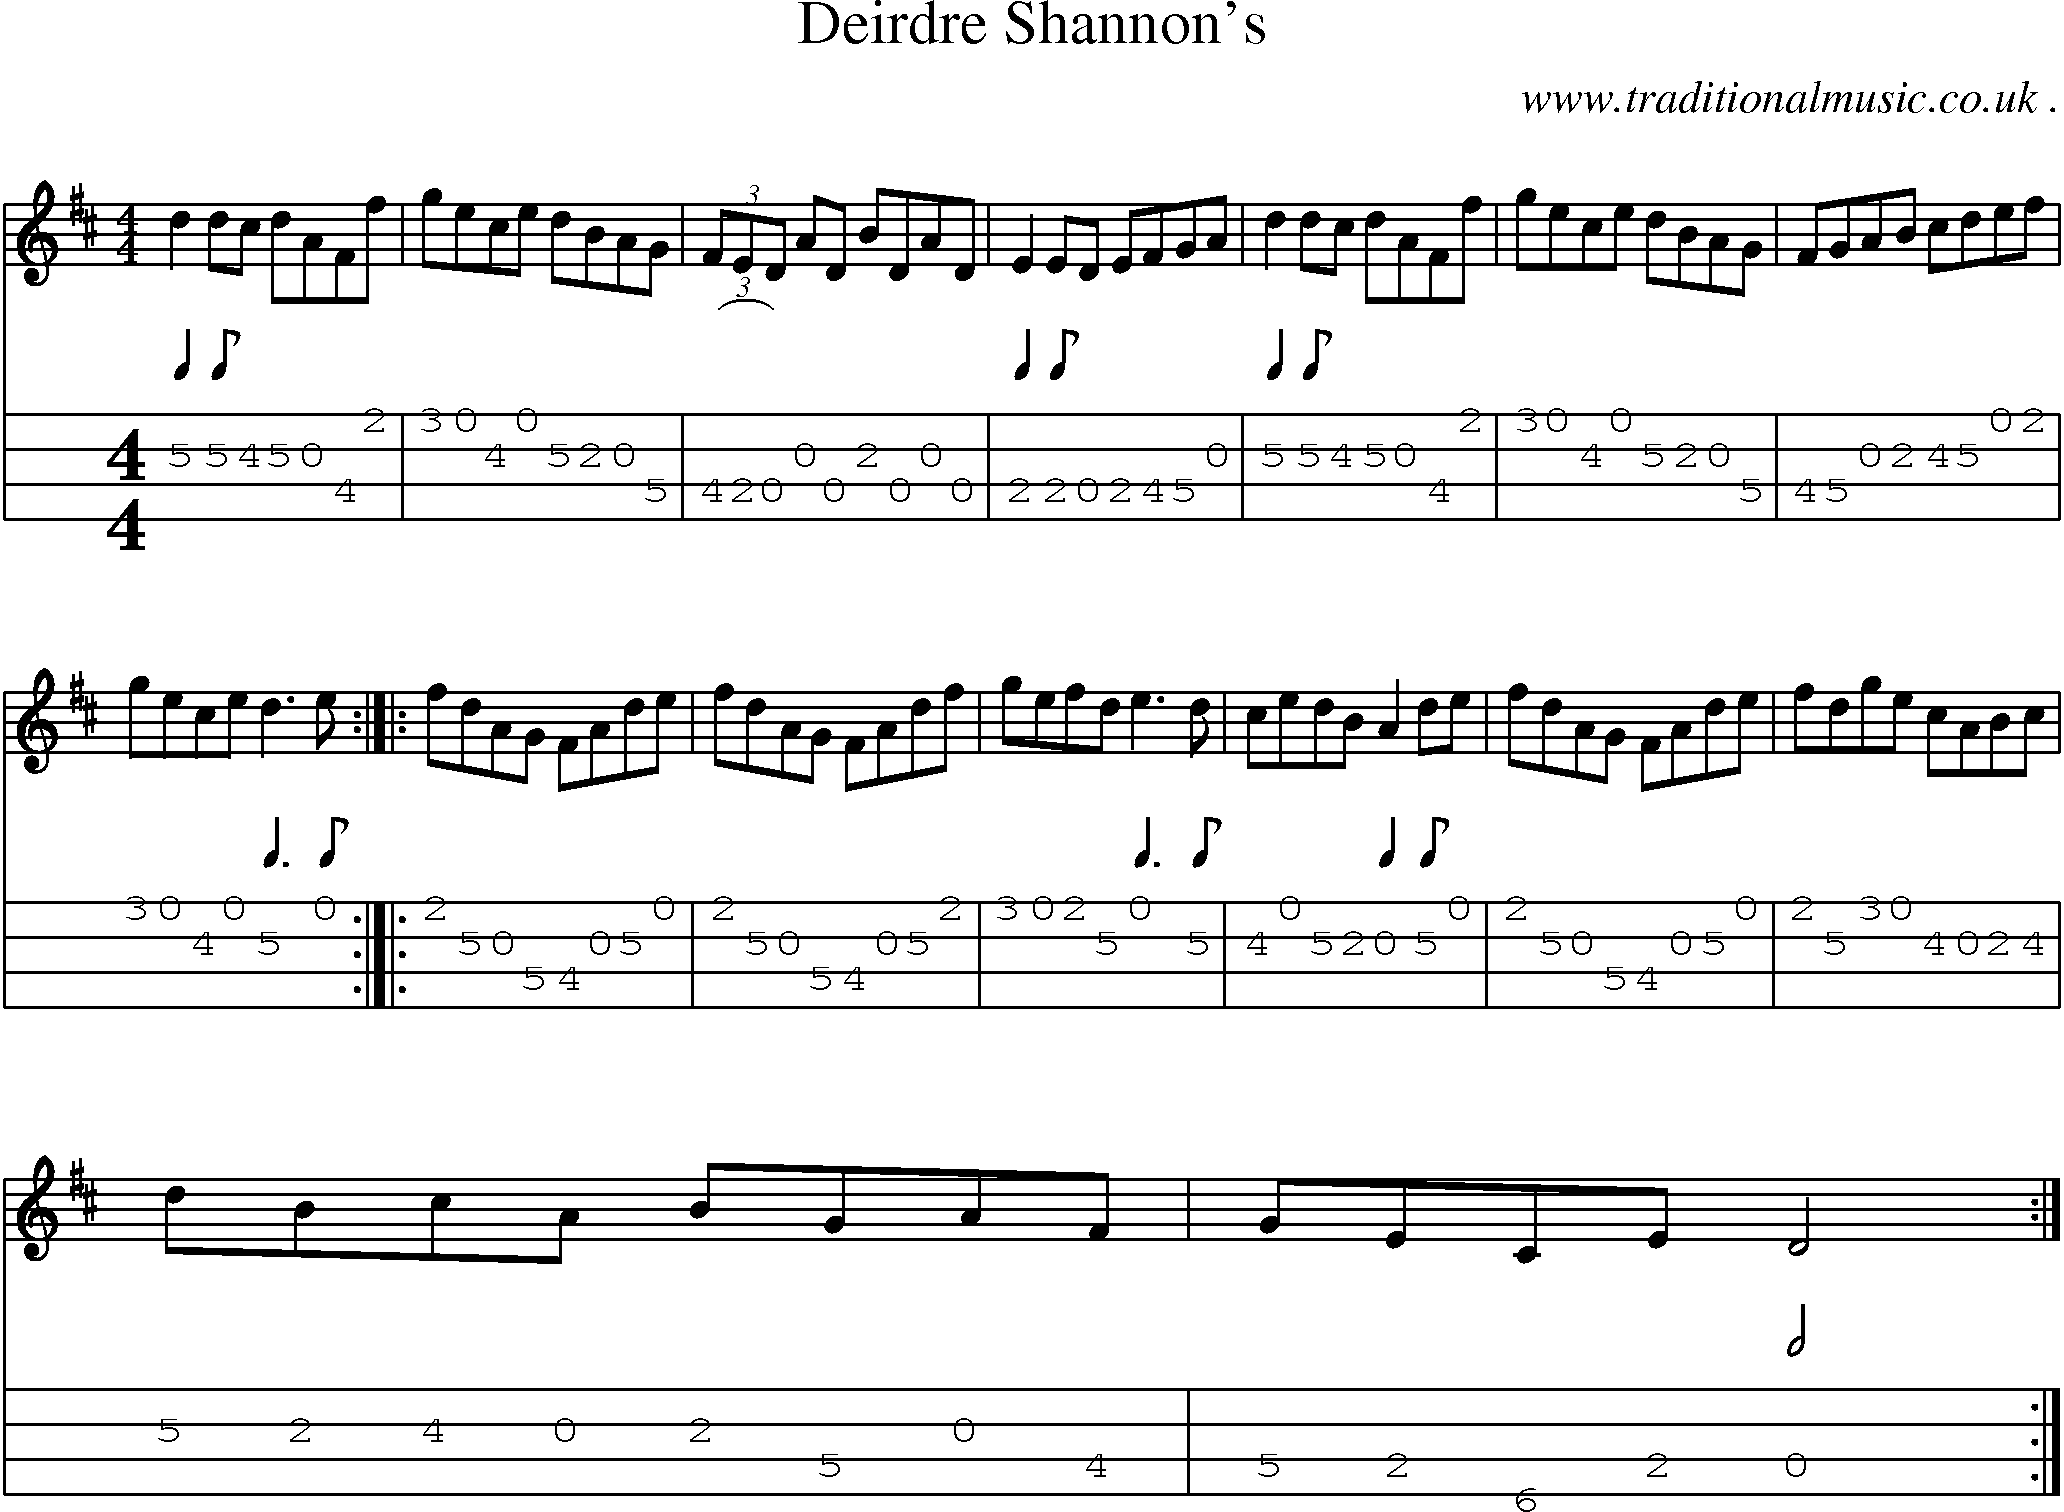 Sheet-Music and Mandolin Tabs for Deirdre Shannons